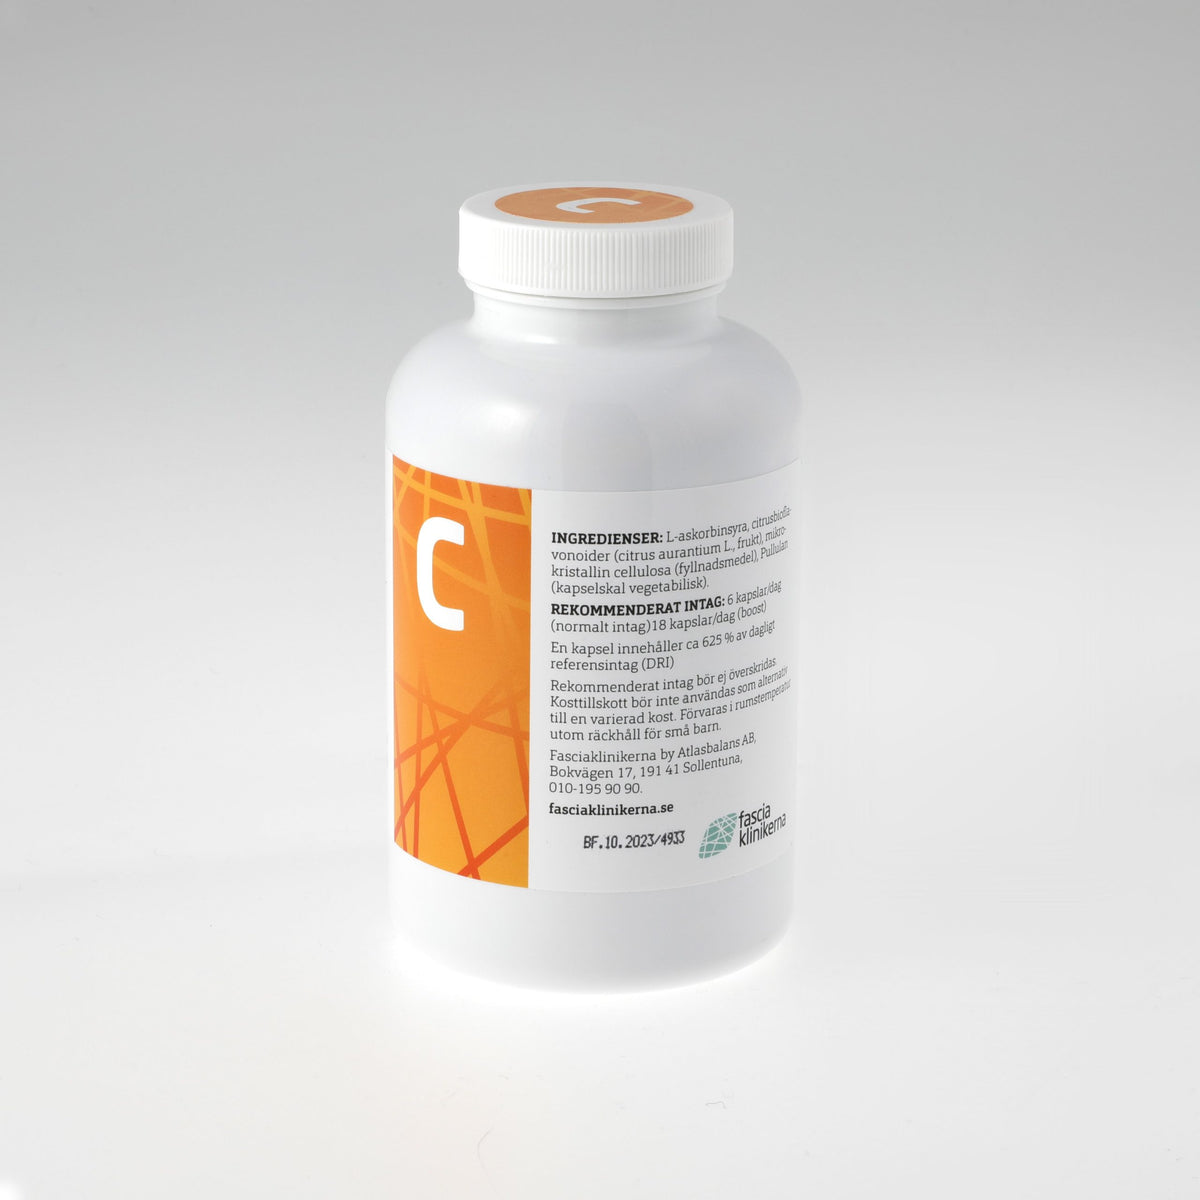 C-vitamin (kapsel)